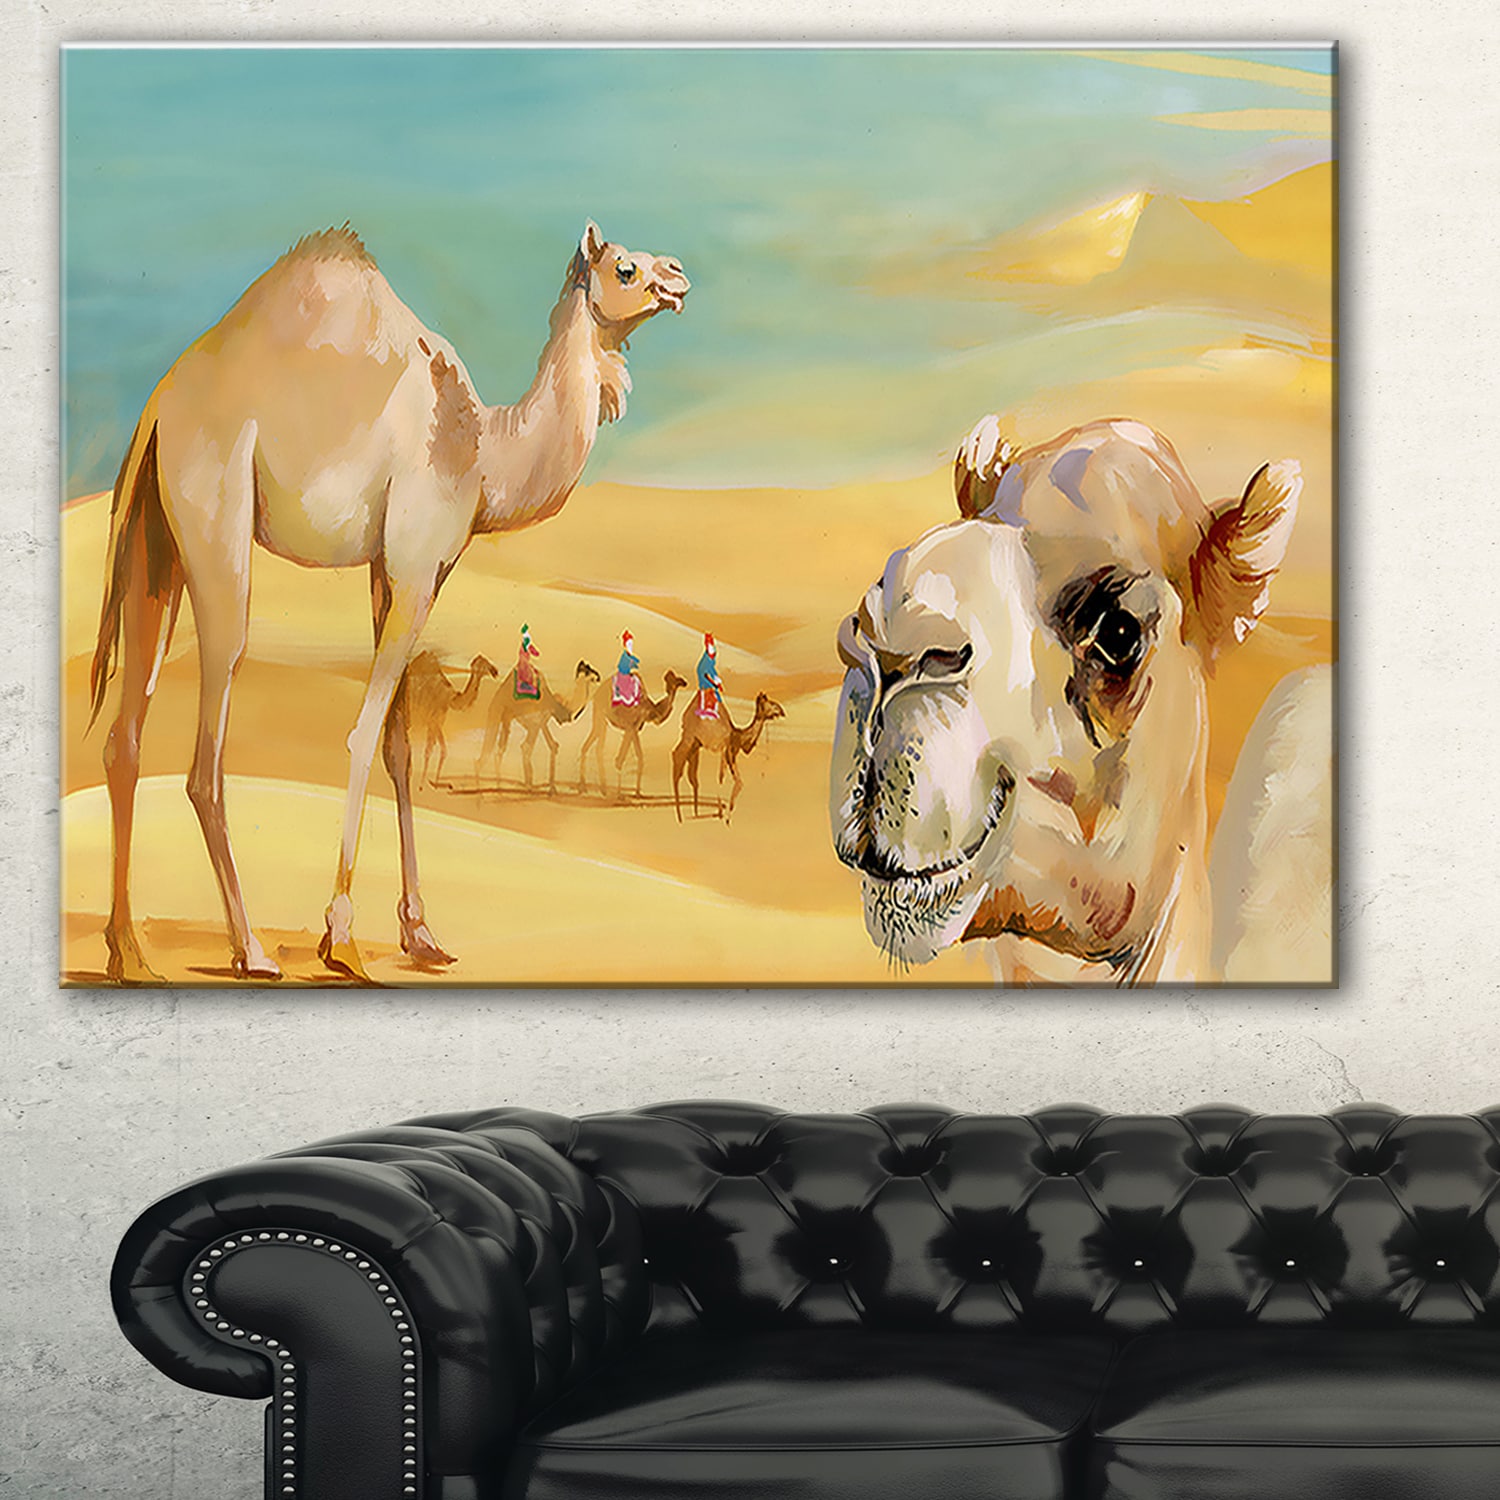 Desert Shower Curtain Camel Animal Pattern Art Print for Bathroom 70 Inches Long 